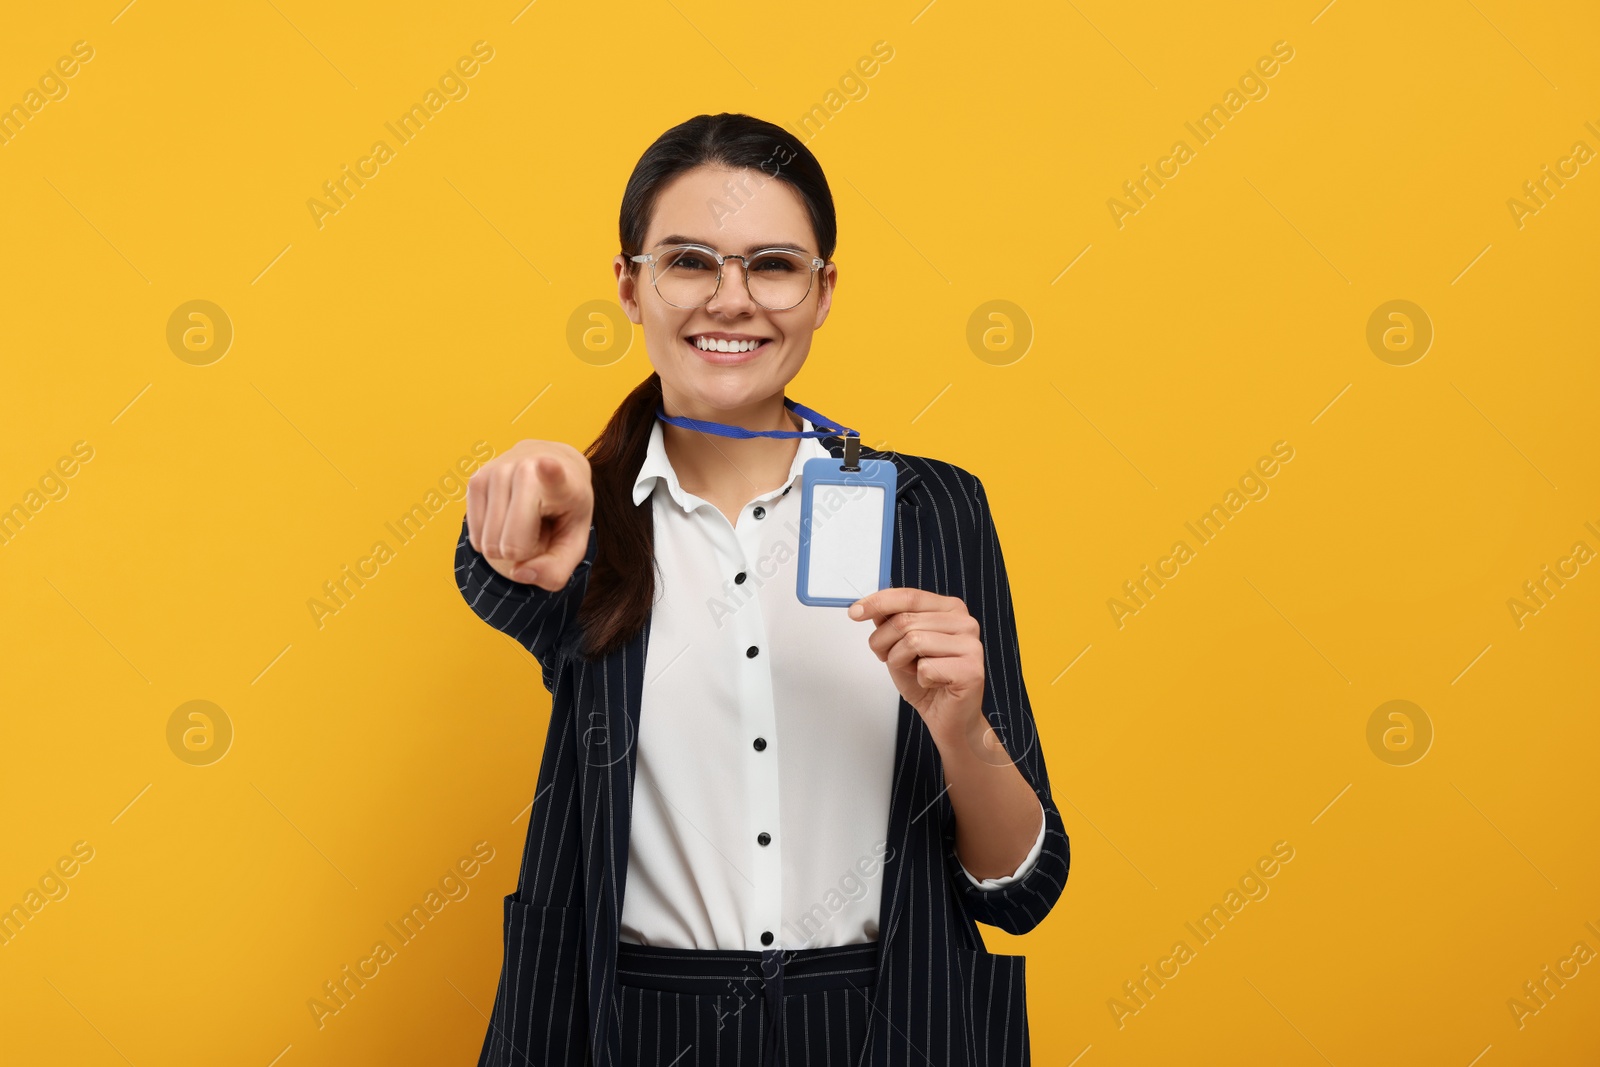 Photo of Happy woman with vip pass badge on orange background